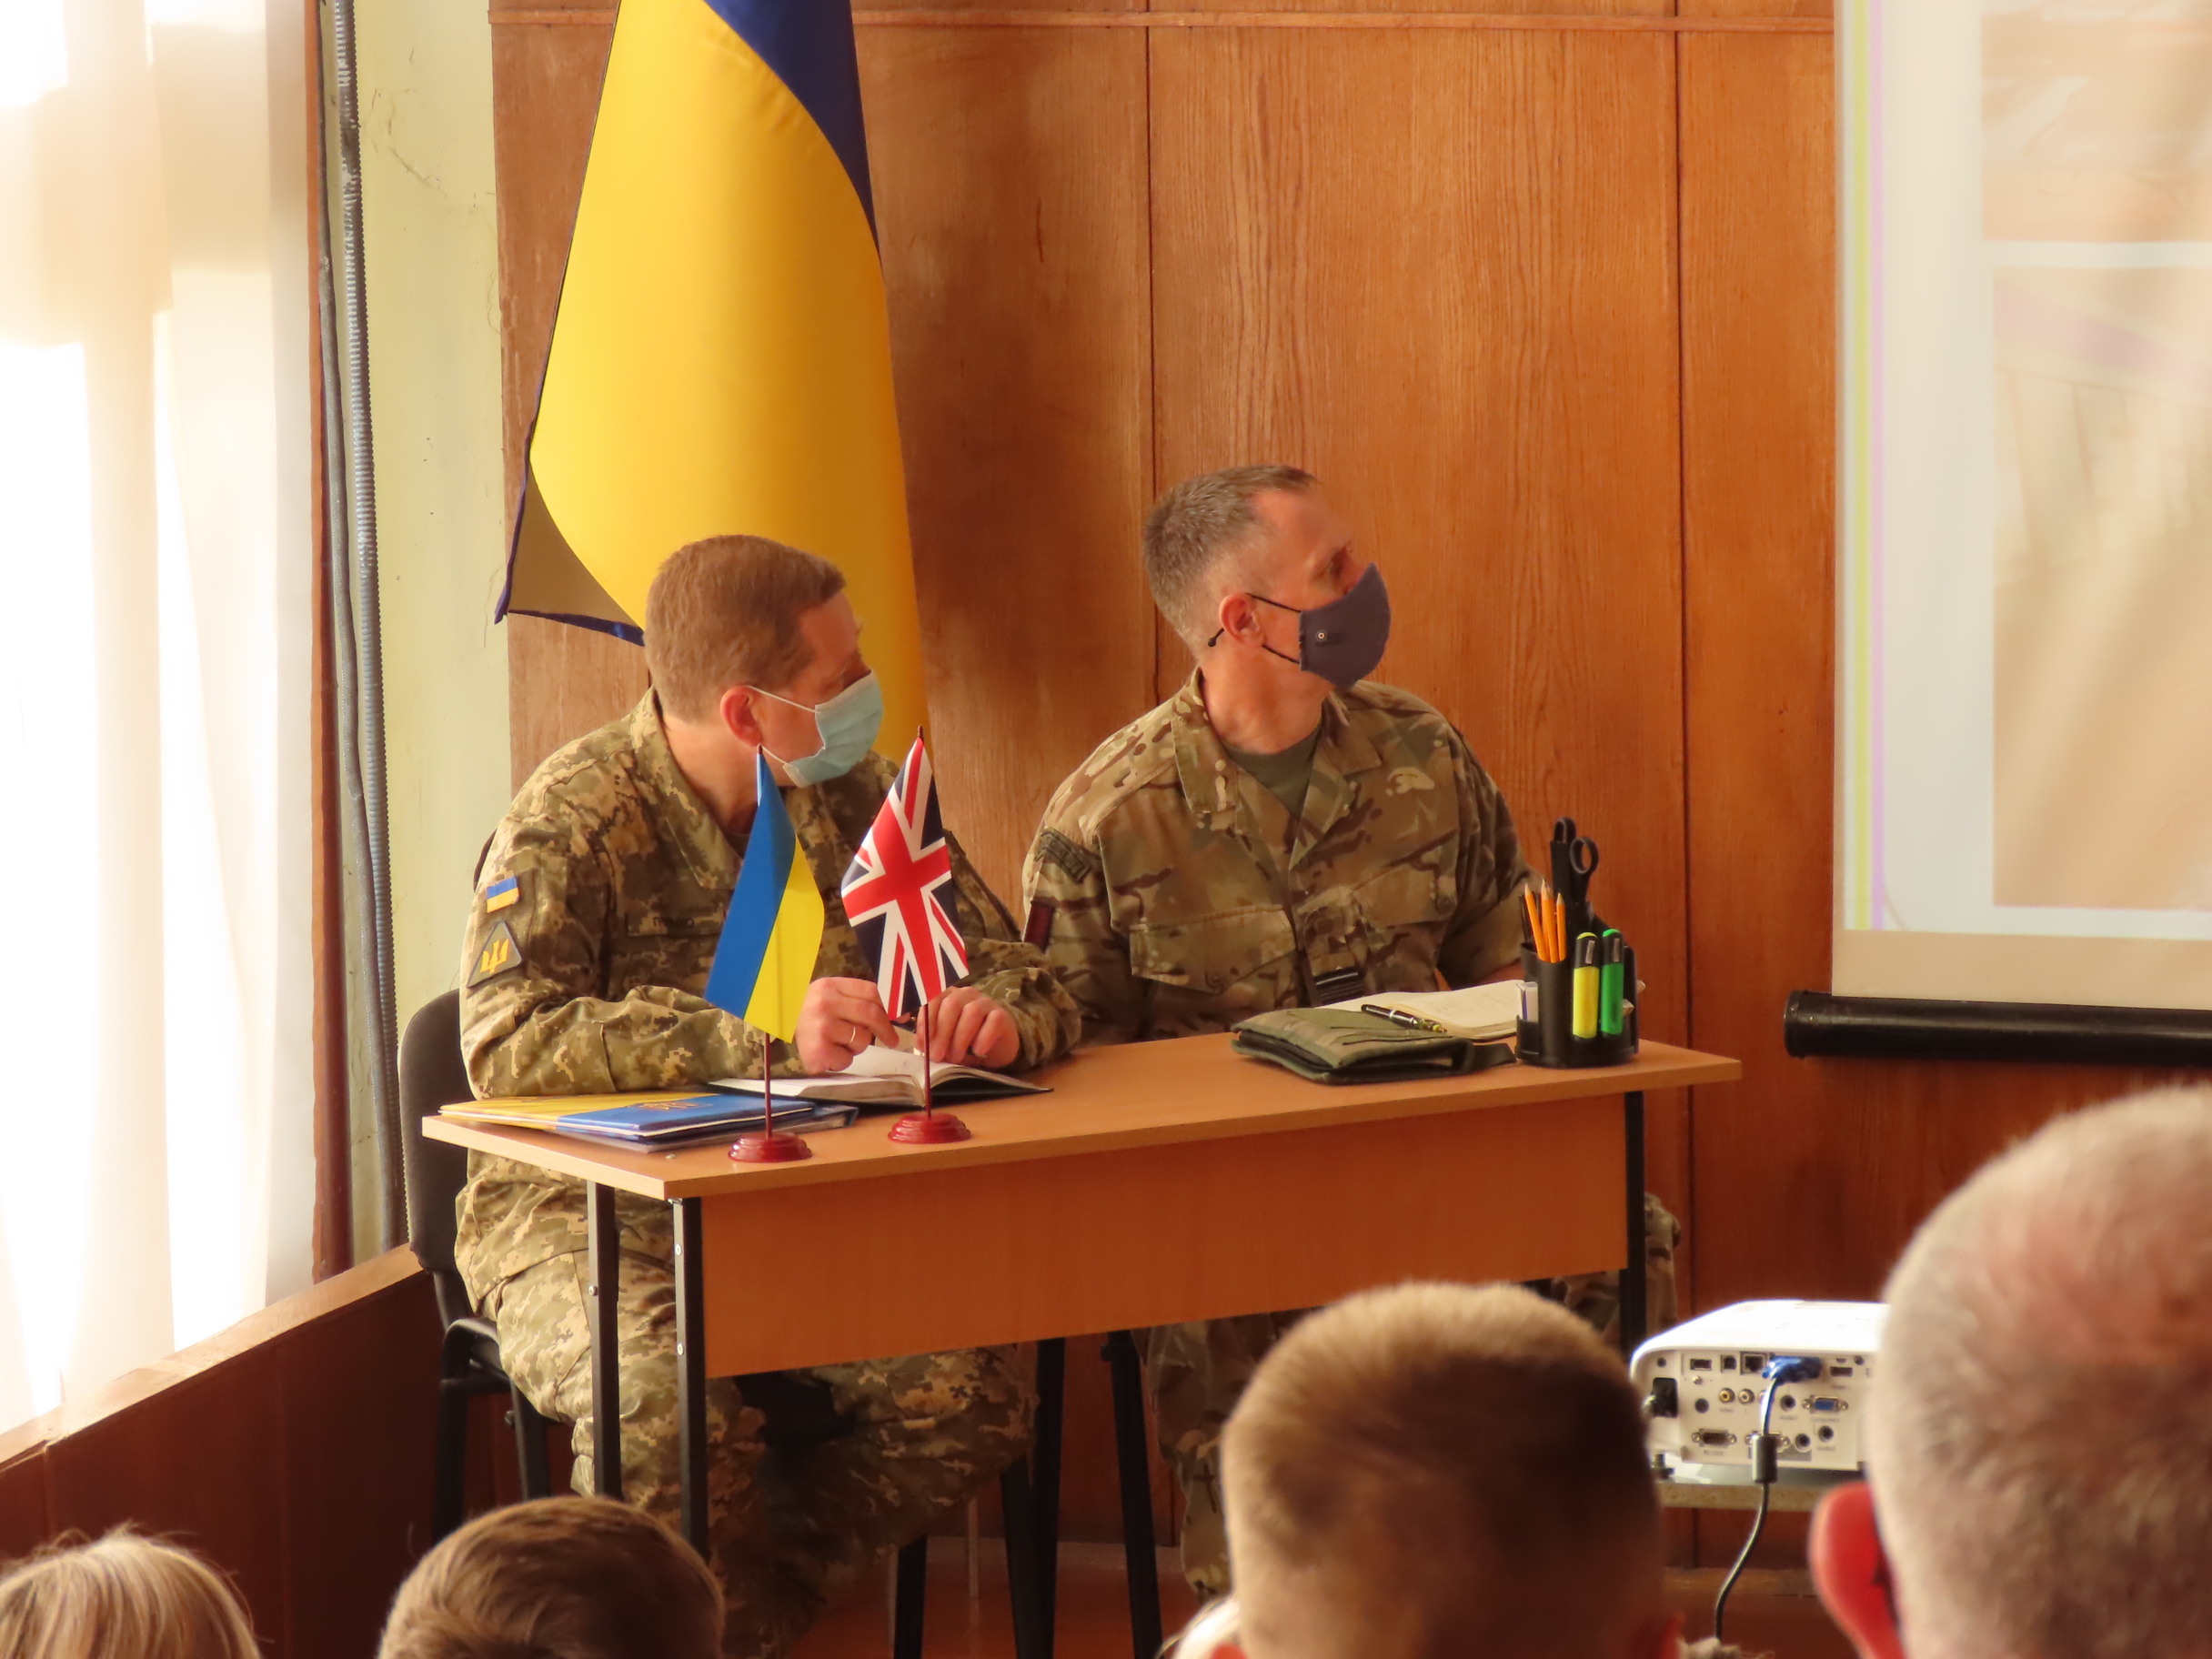 Personnel sit at desk with Ukrainian flag.